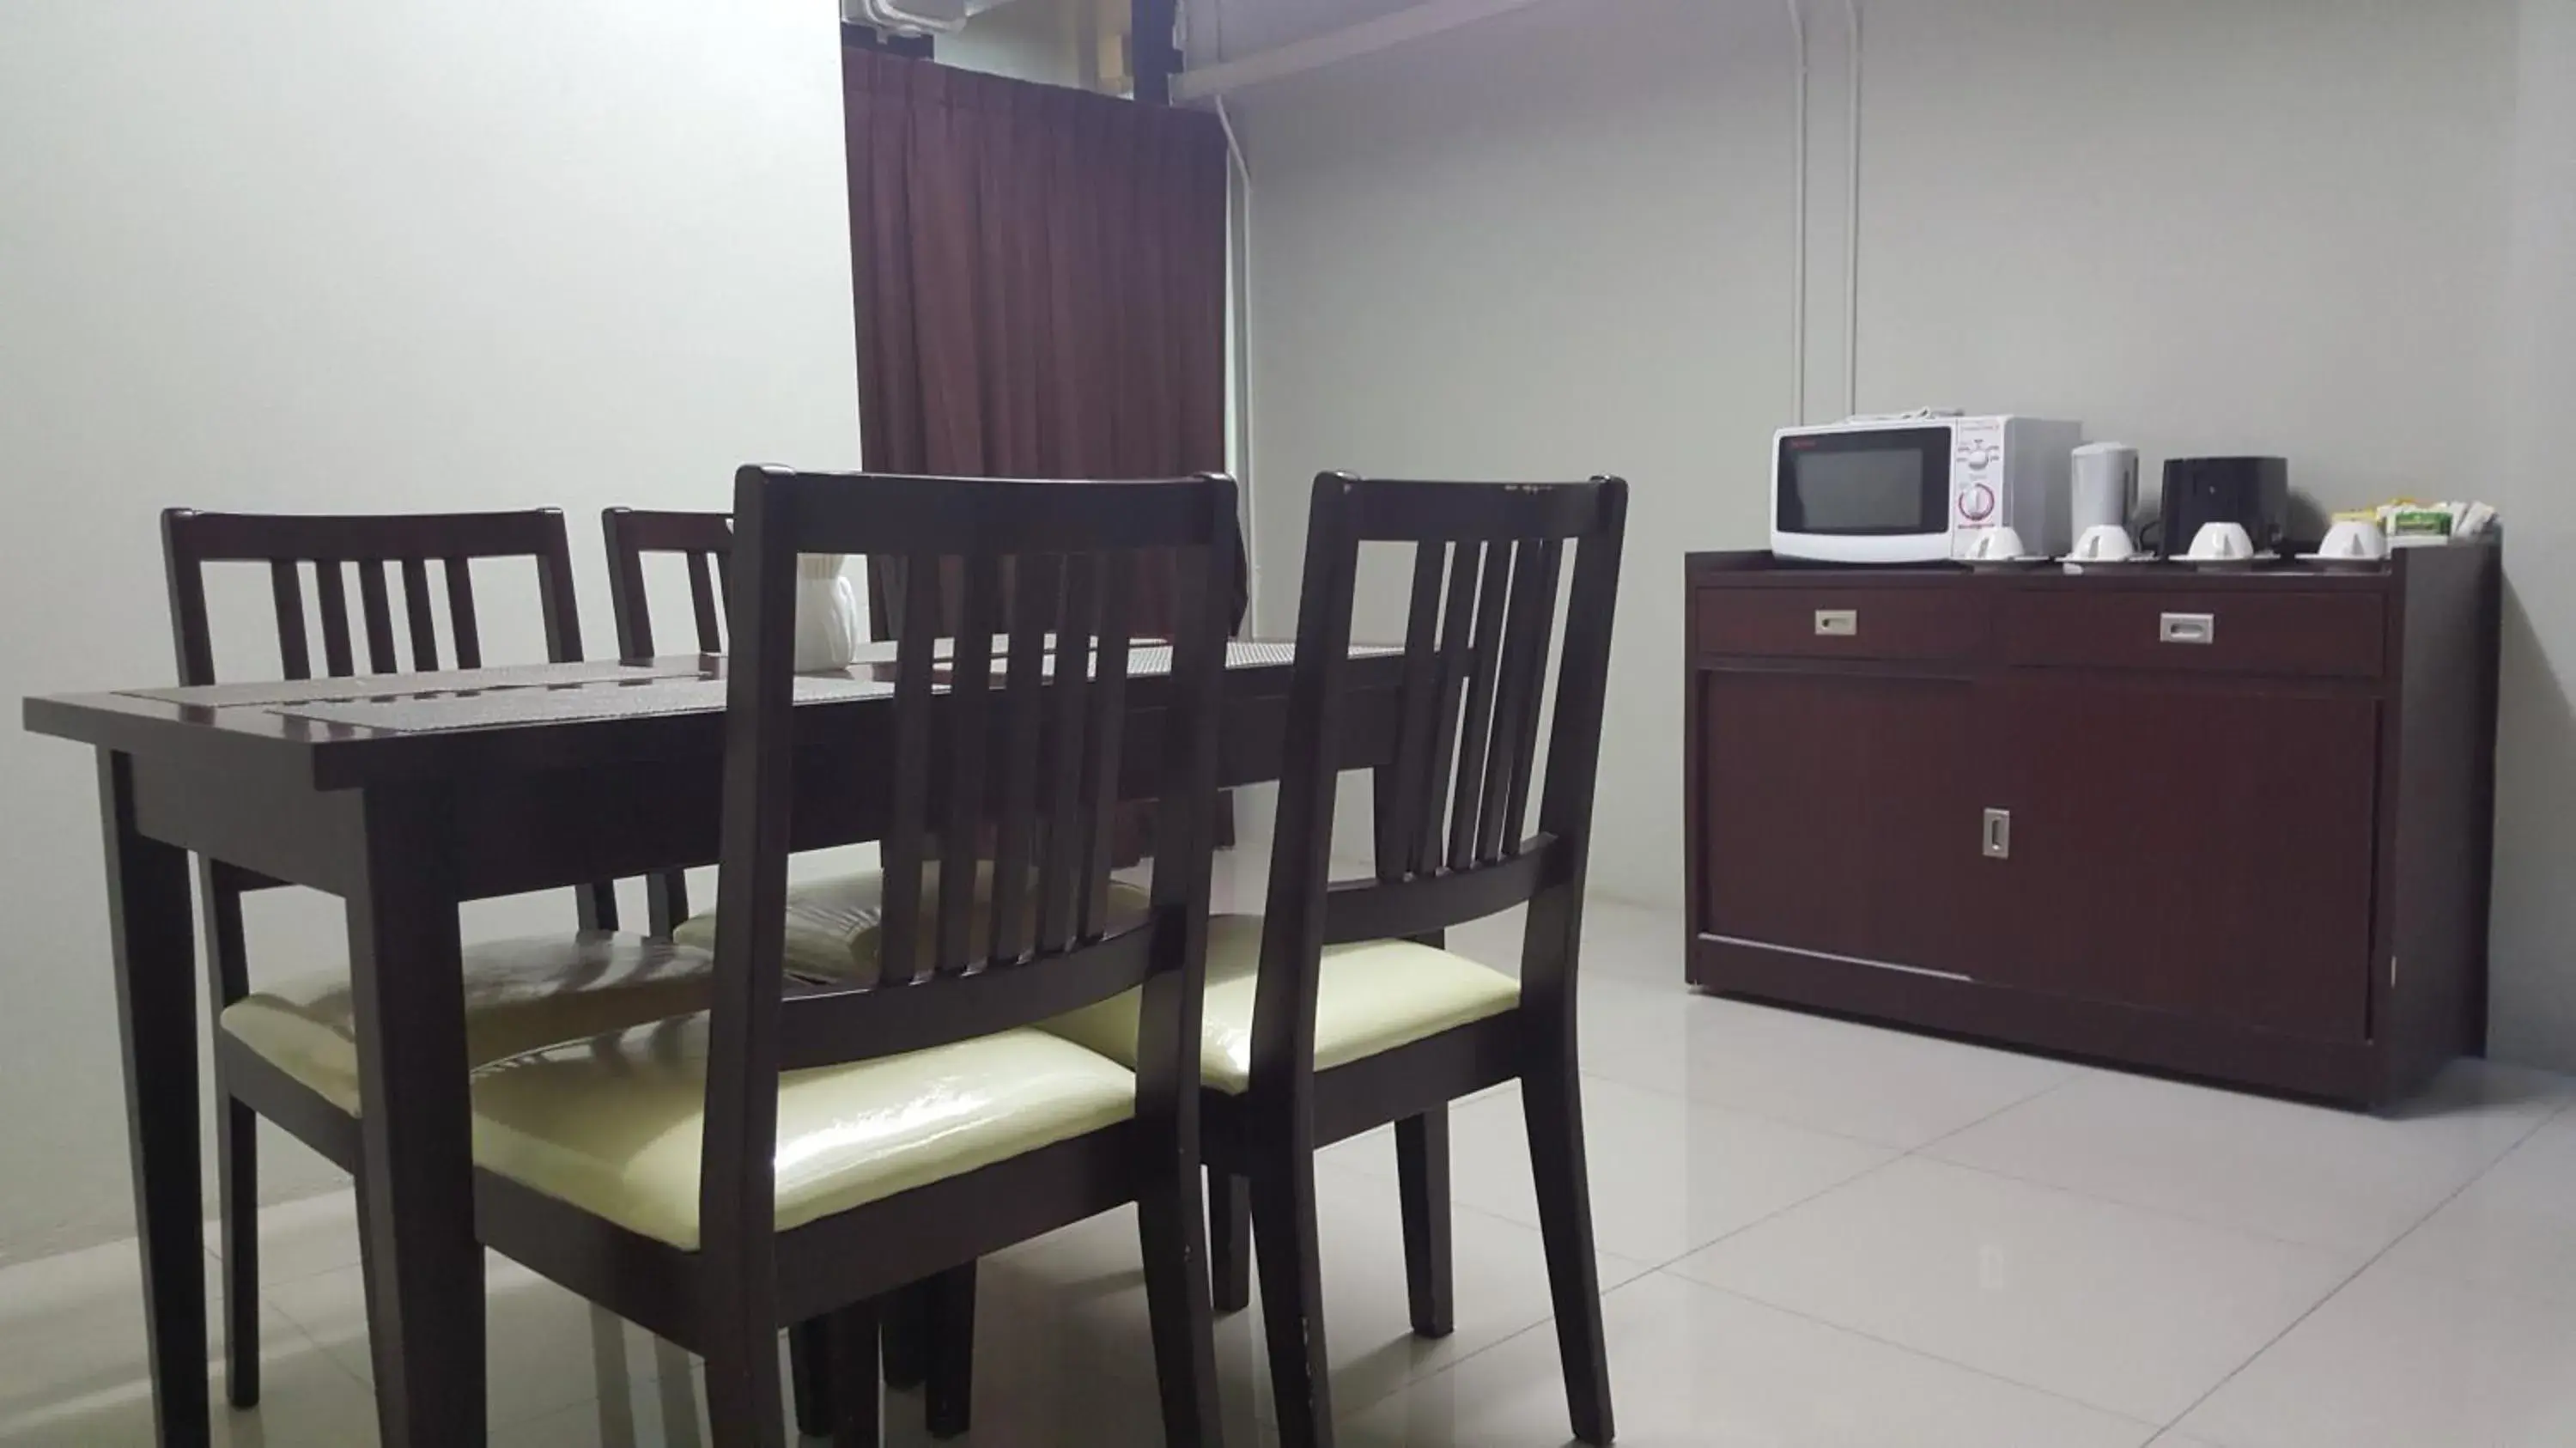 Area and facilities, Dining Area in Annex Lumpini Bangkok